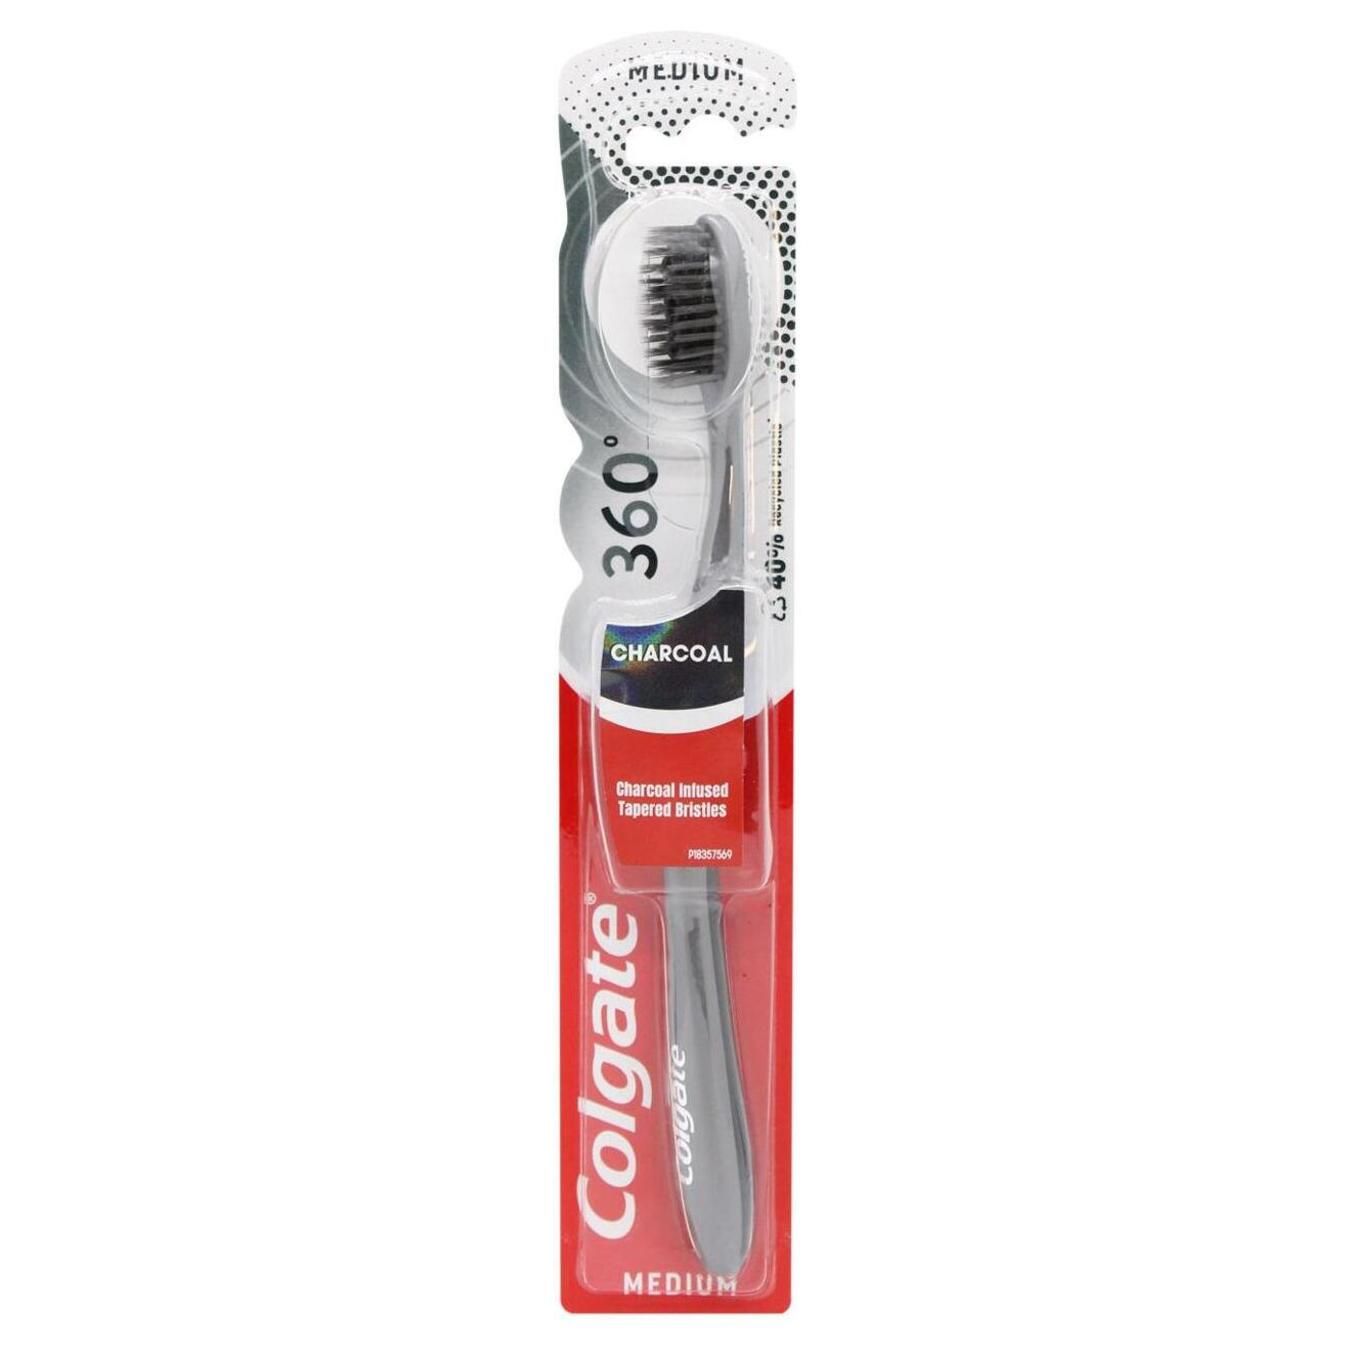 Toothbrush Colgate charcoal 360 of medium hardness